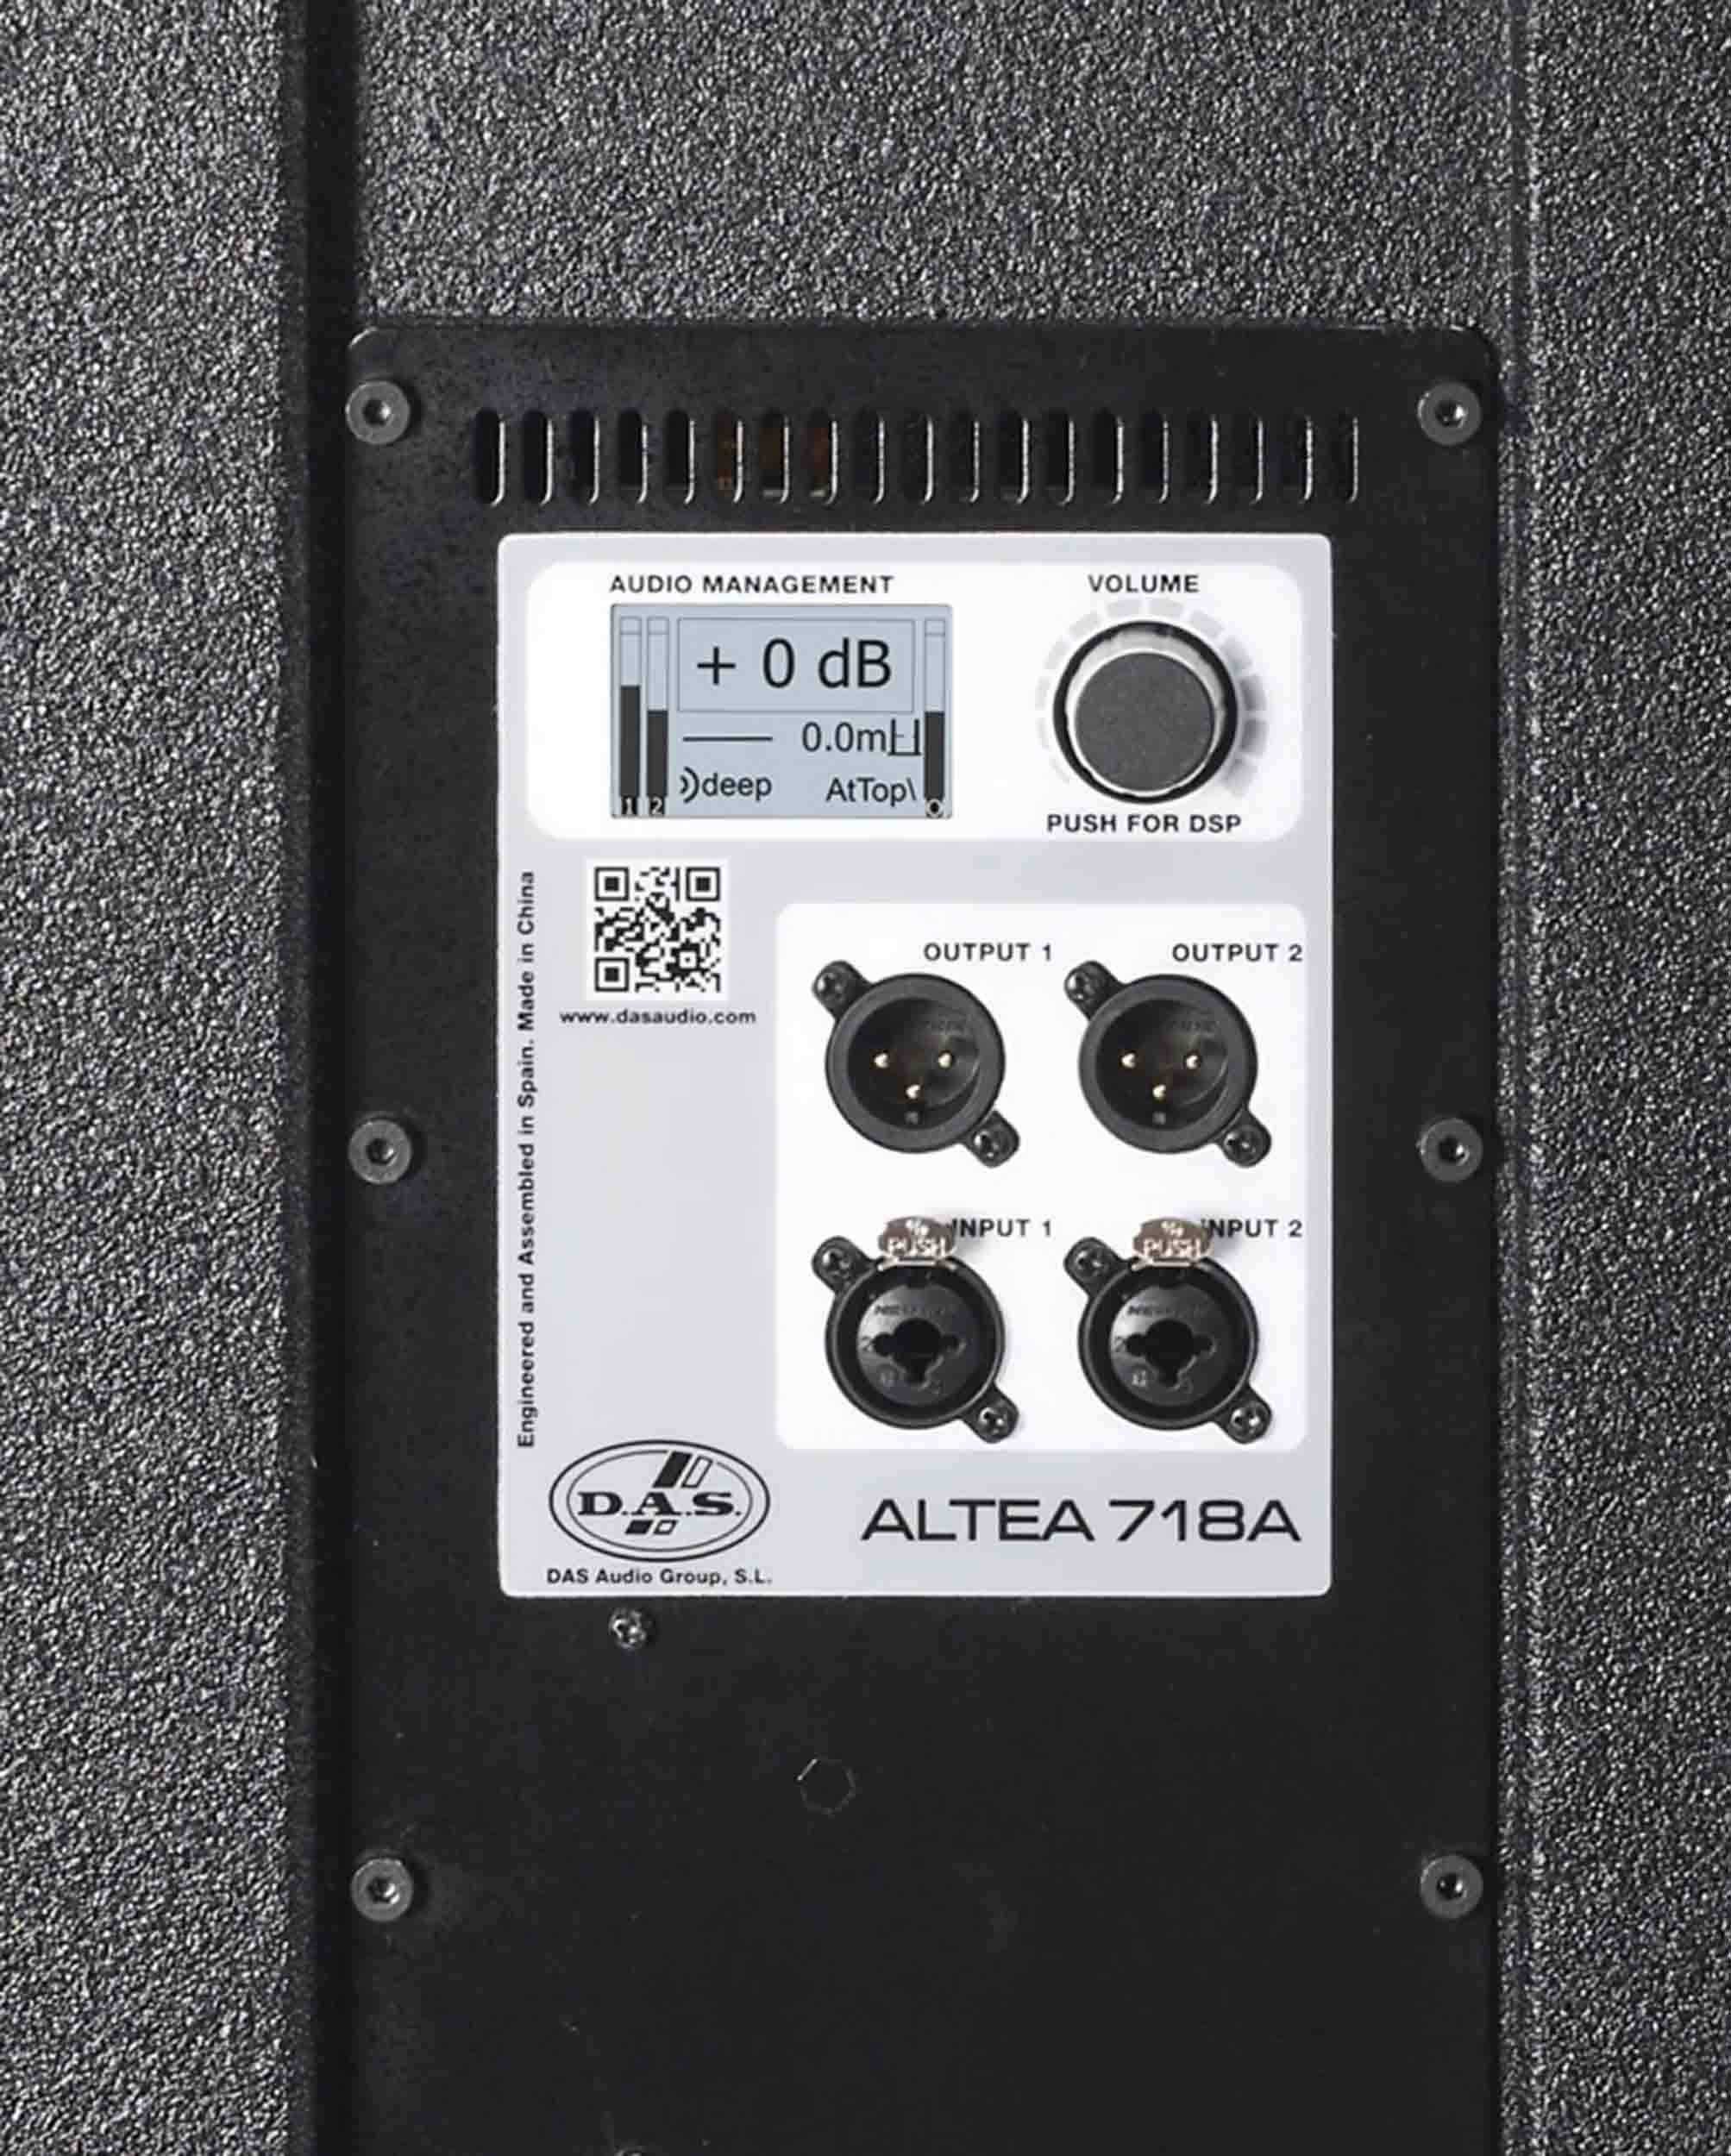 DAS Audio 712ACVR12718ATSP1, 12-Inch Powered Speaker DJ Package with Subs by DAS Audio